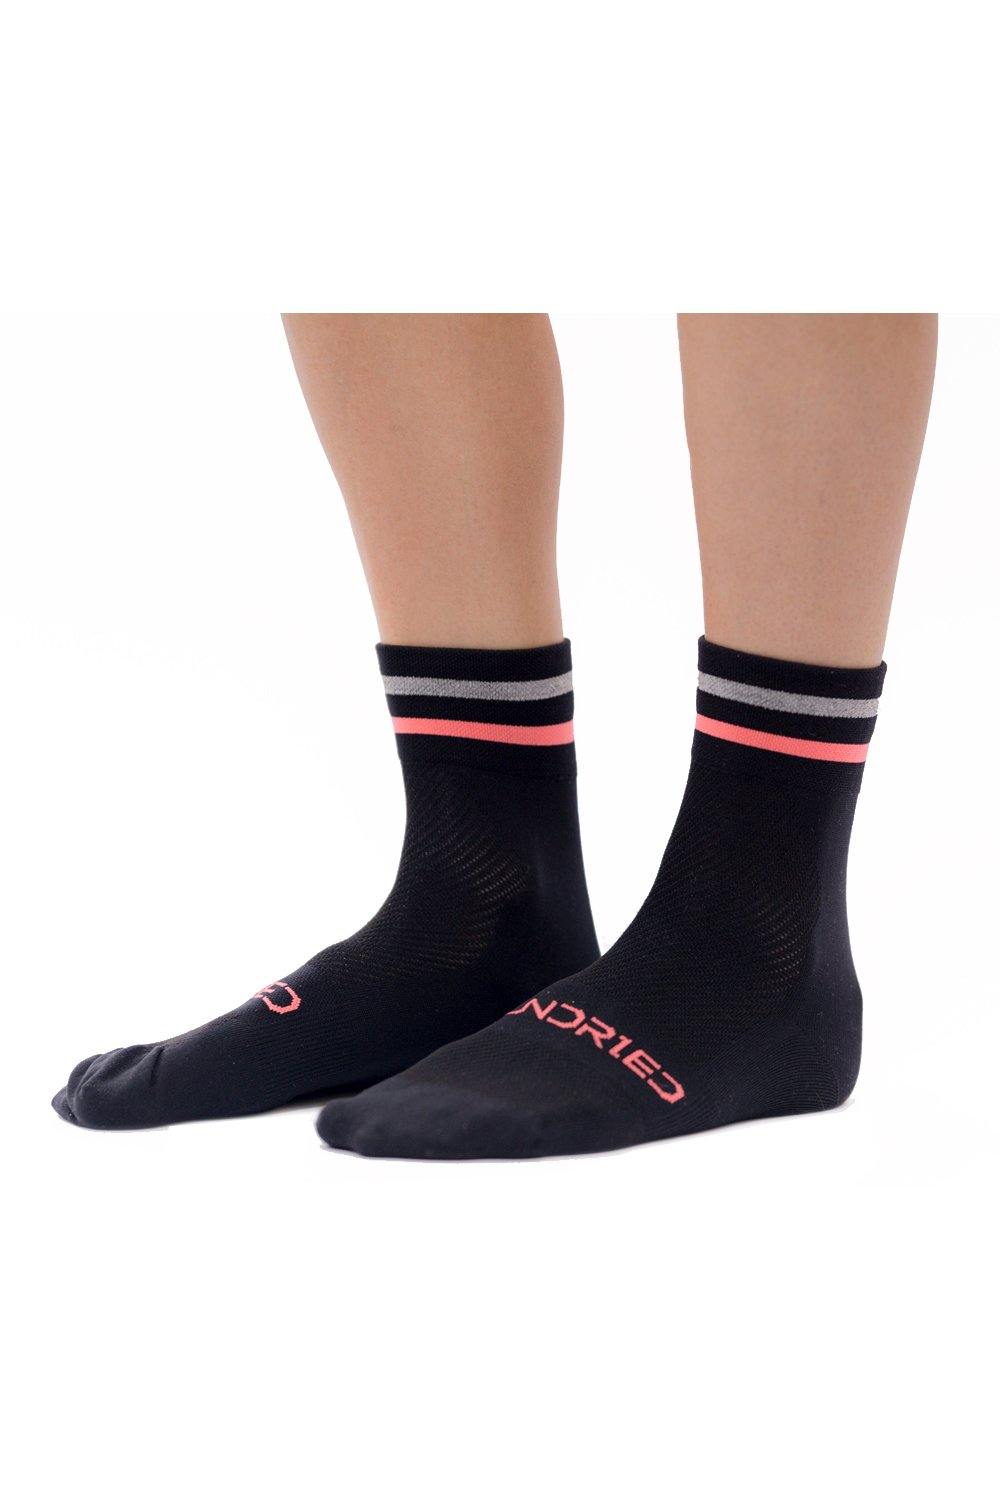 Sundried Cycle Socks Black w Reflective Stripe Cycle Socks Activewear